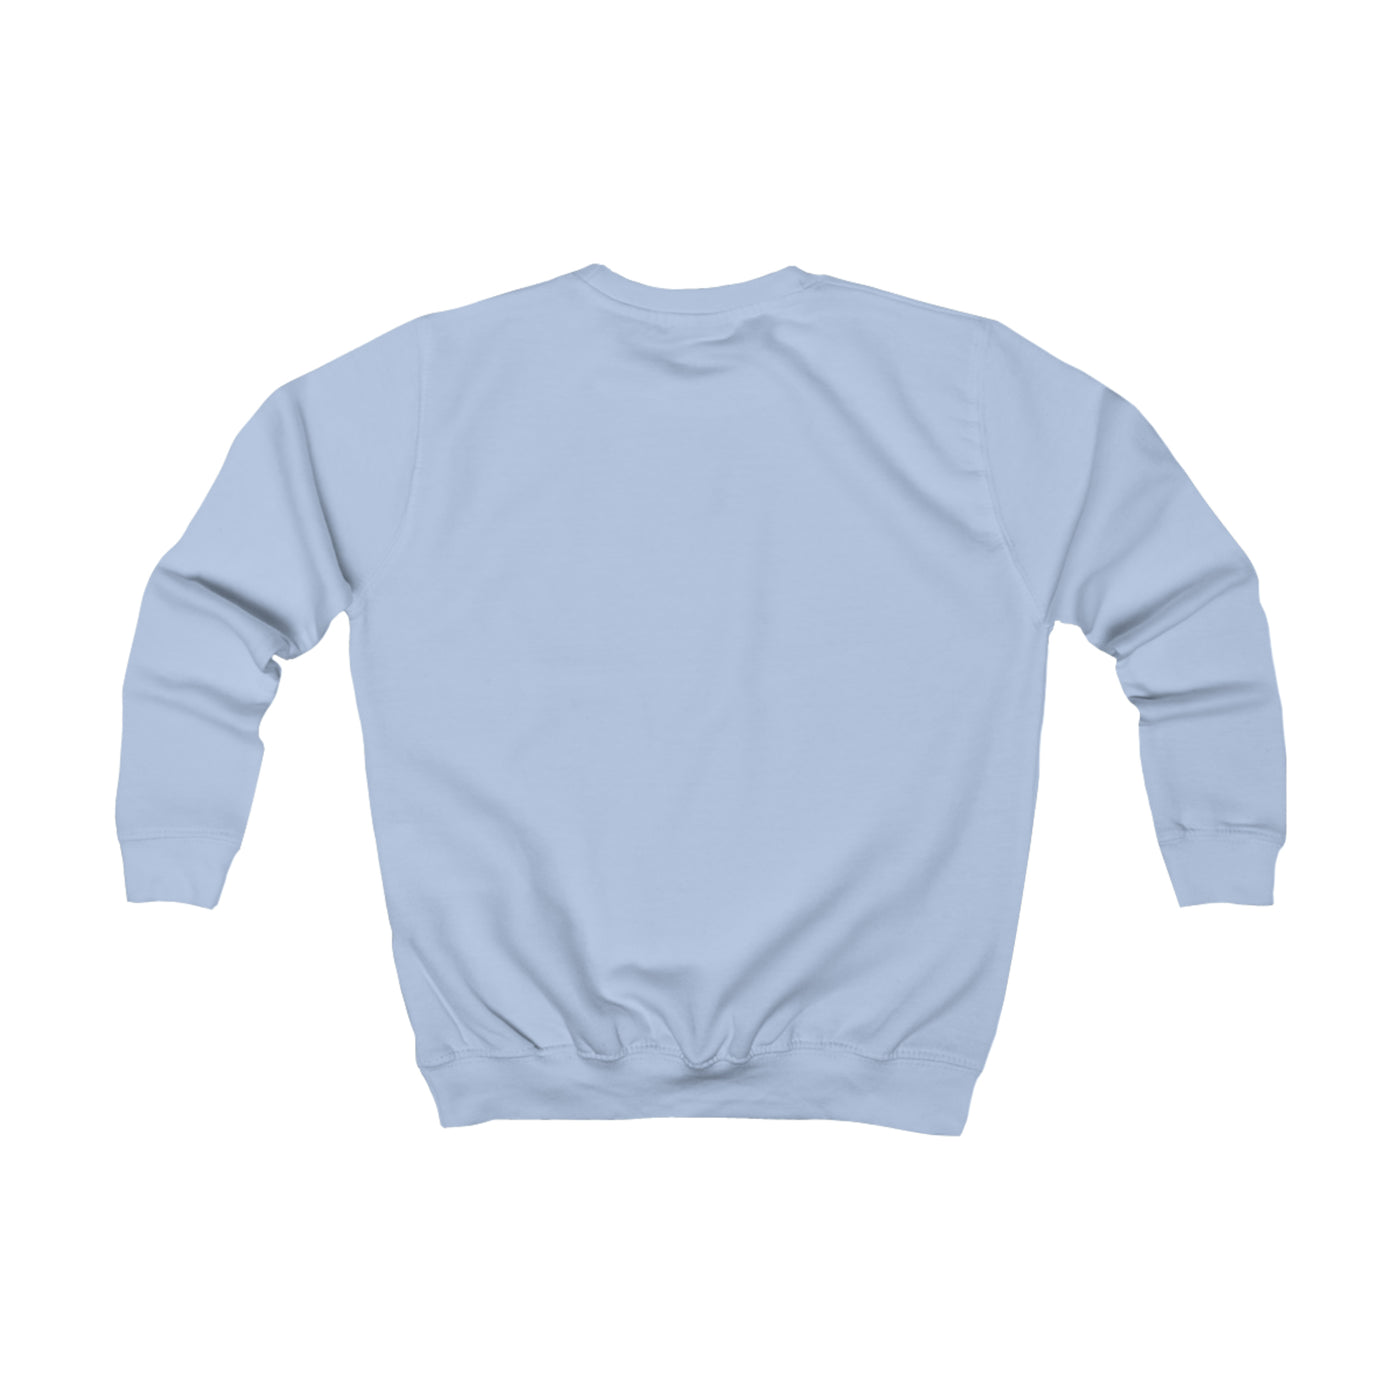 Bold Girl Sweatshirt - Caramel